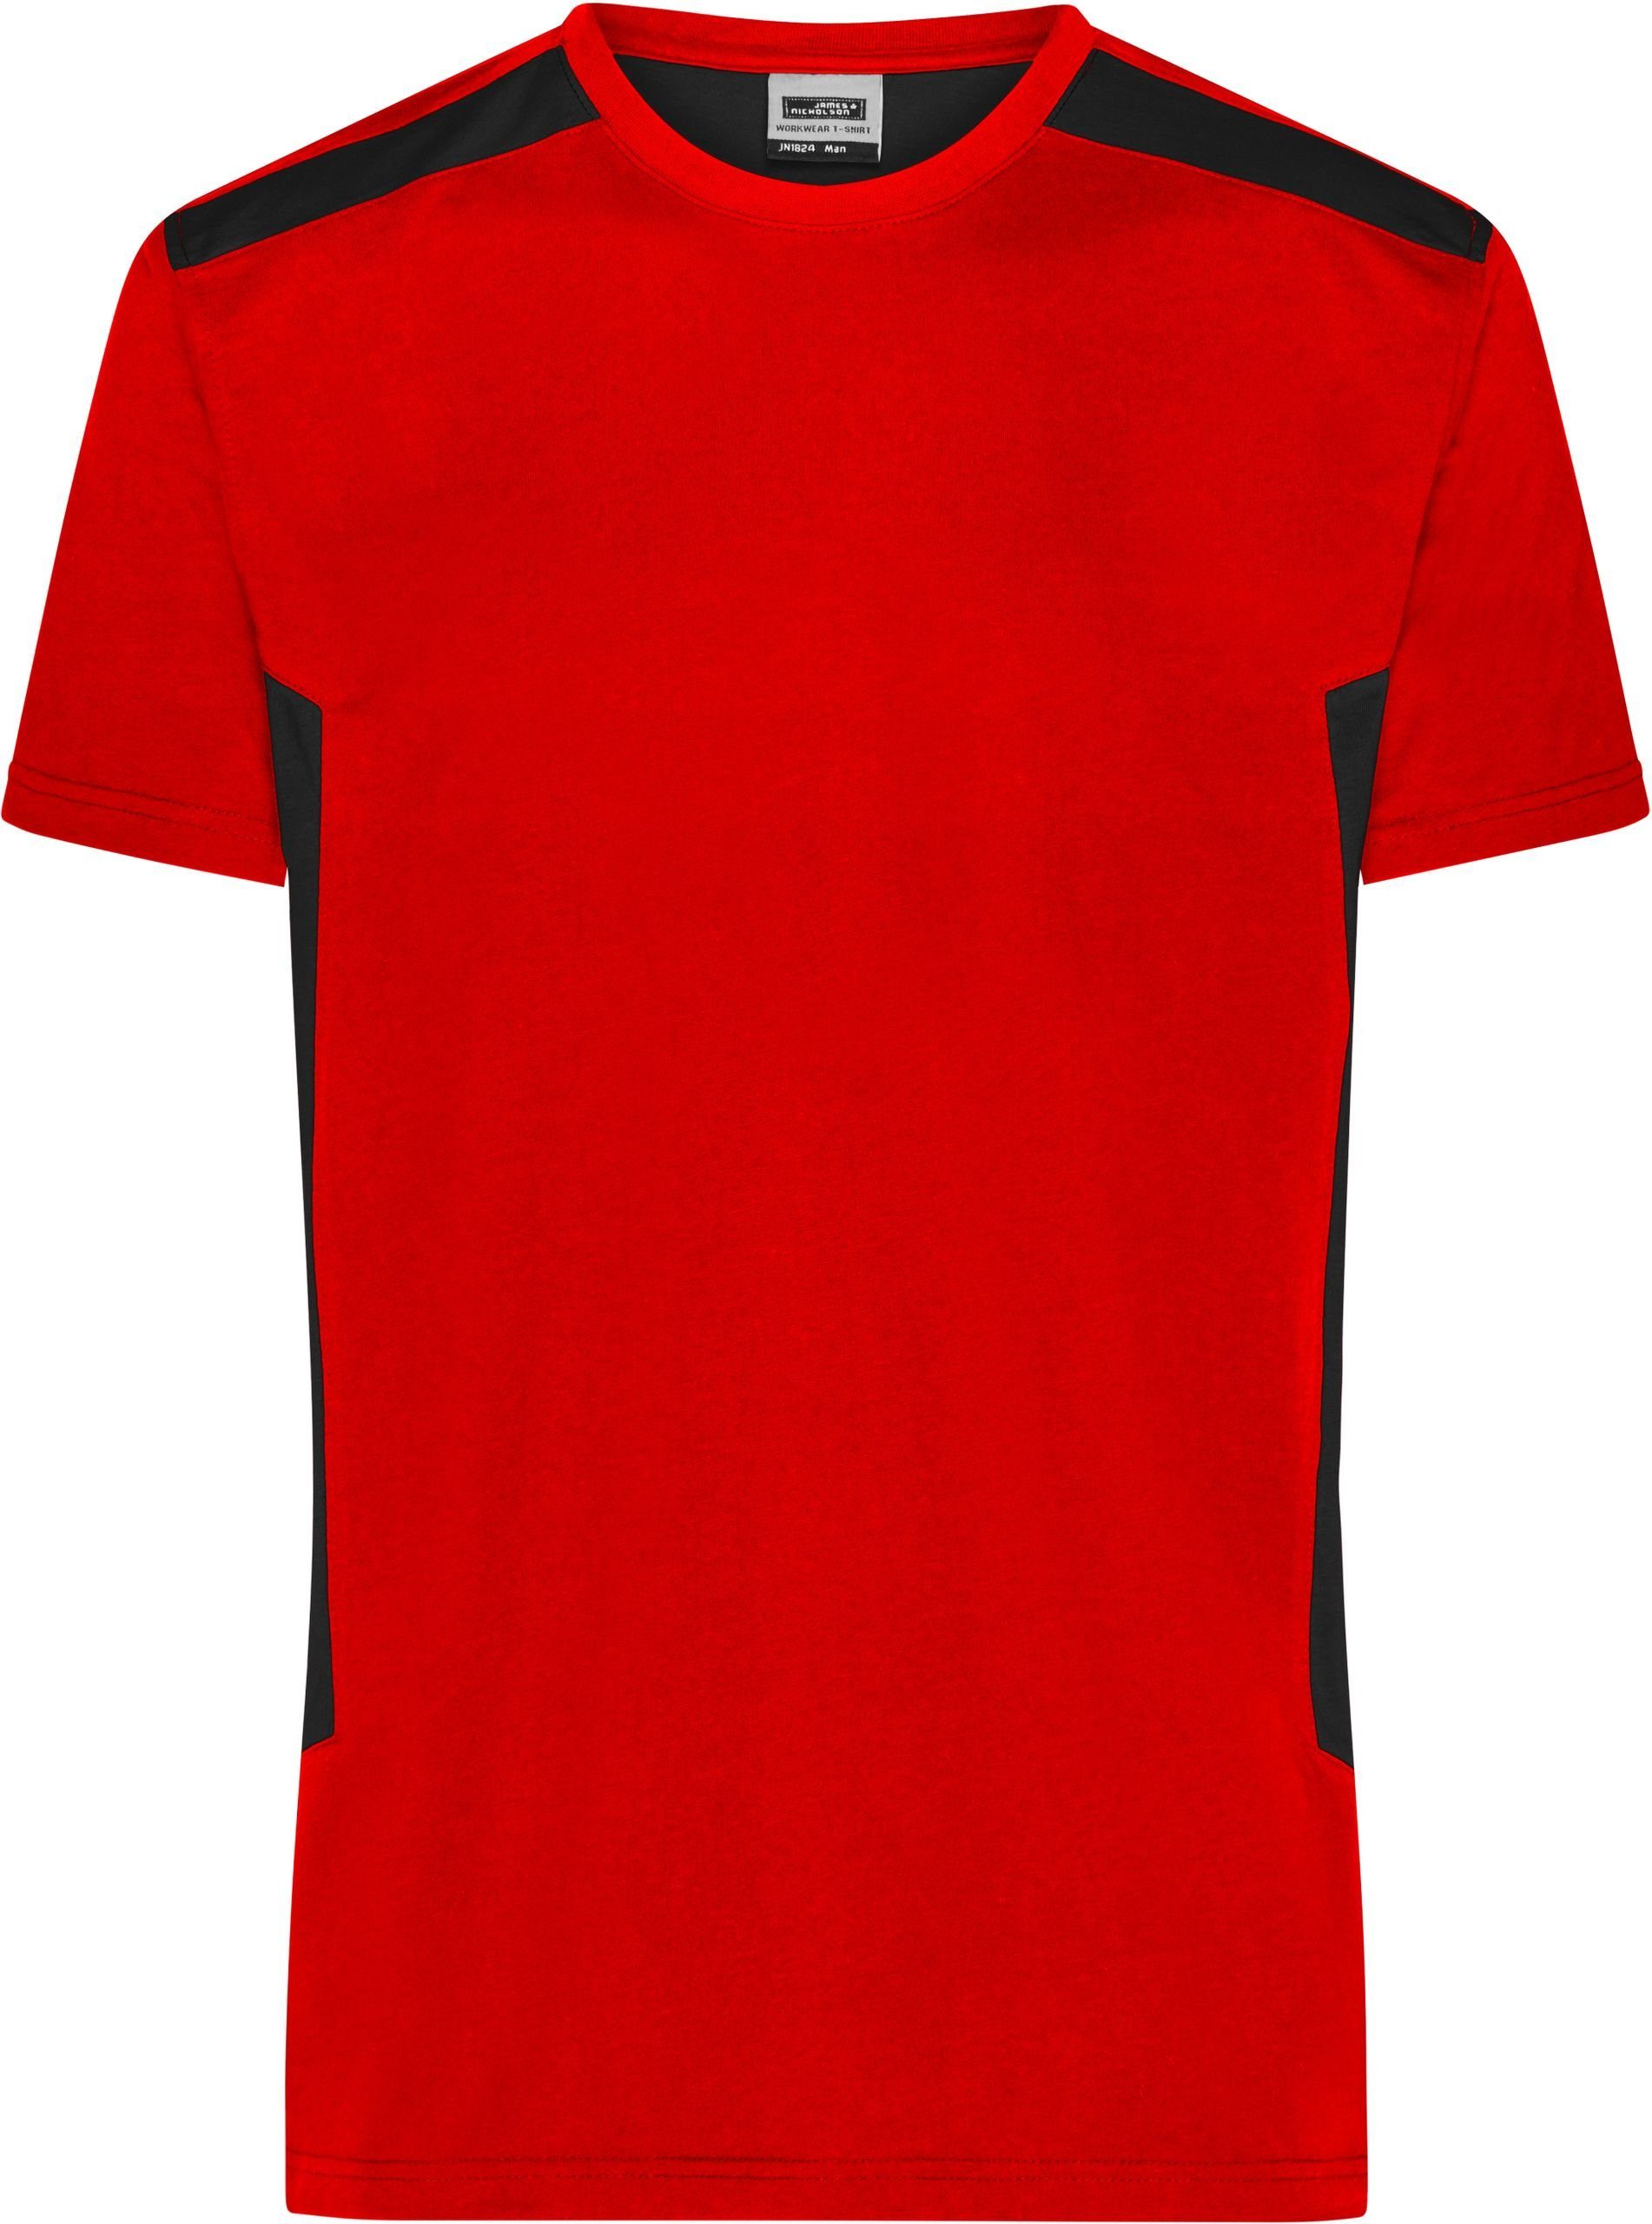 James & Nicholson T-Shirt Herren Workwear T-Shirt - Strong RED/BLACK